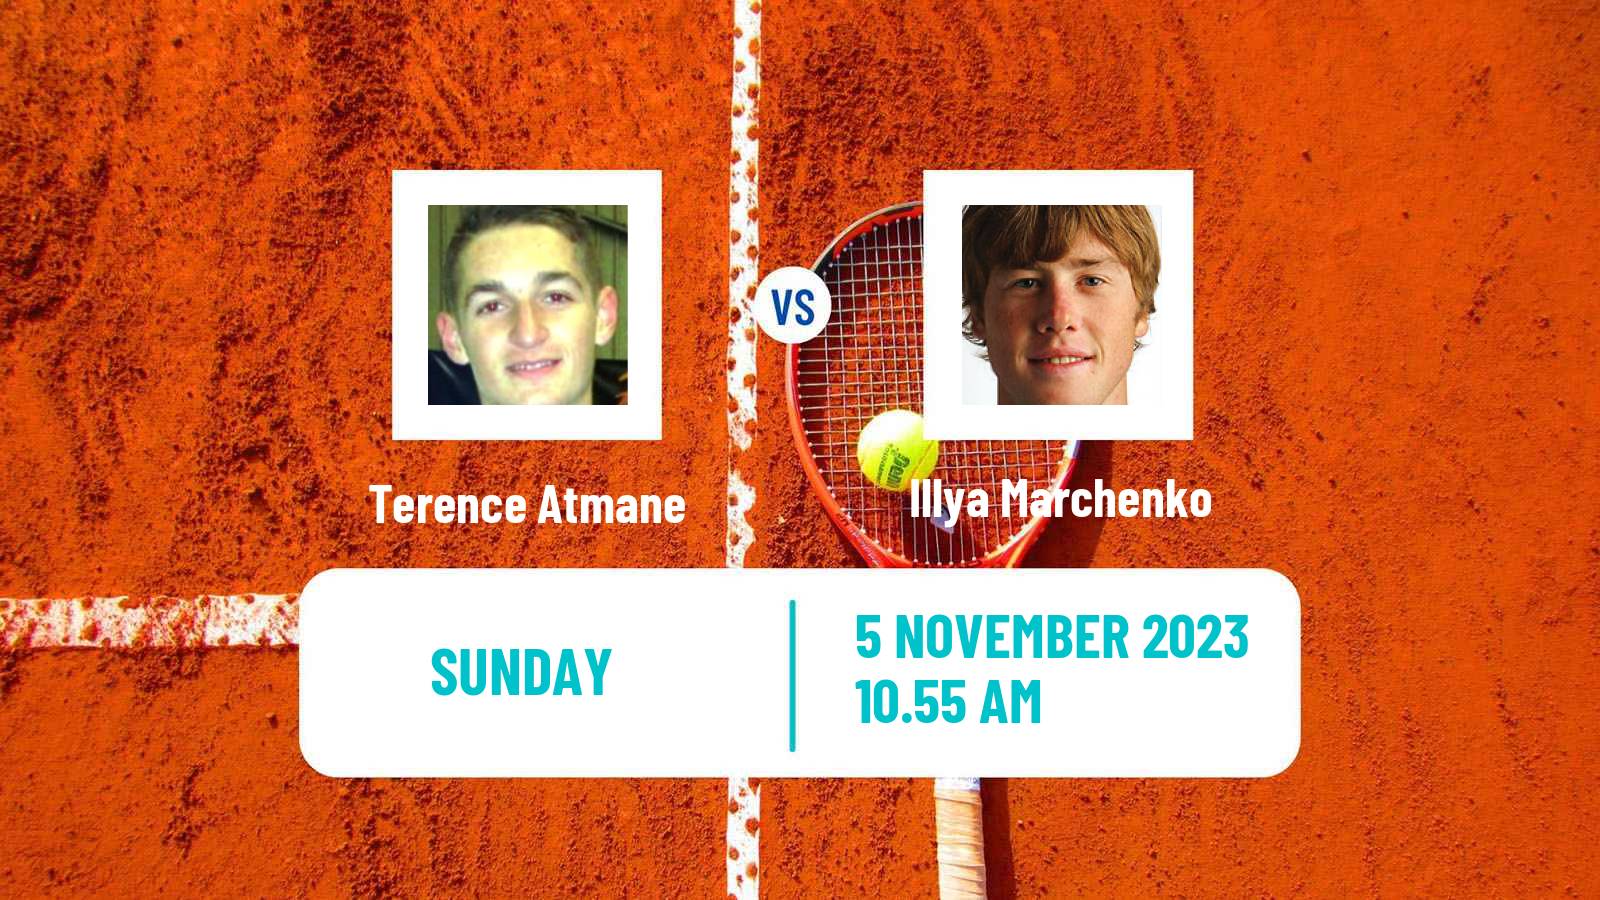 Tennis ATP Sofia Terence Atmane - Illya Marchenko